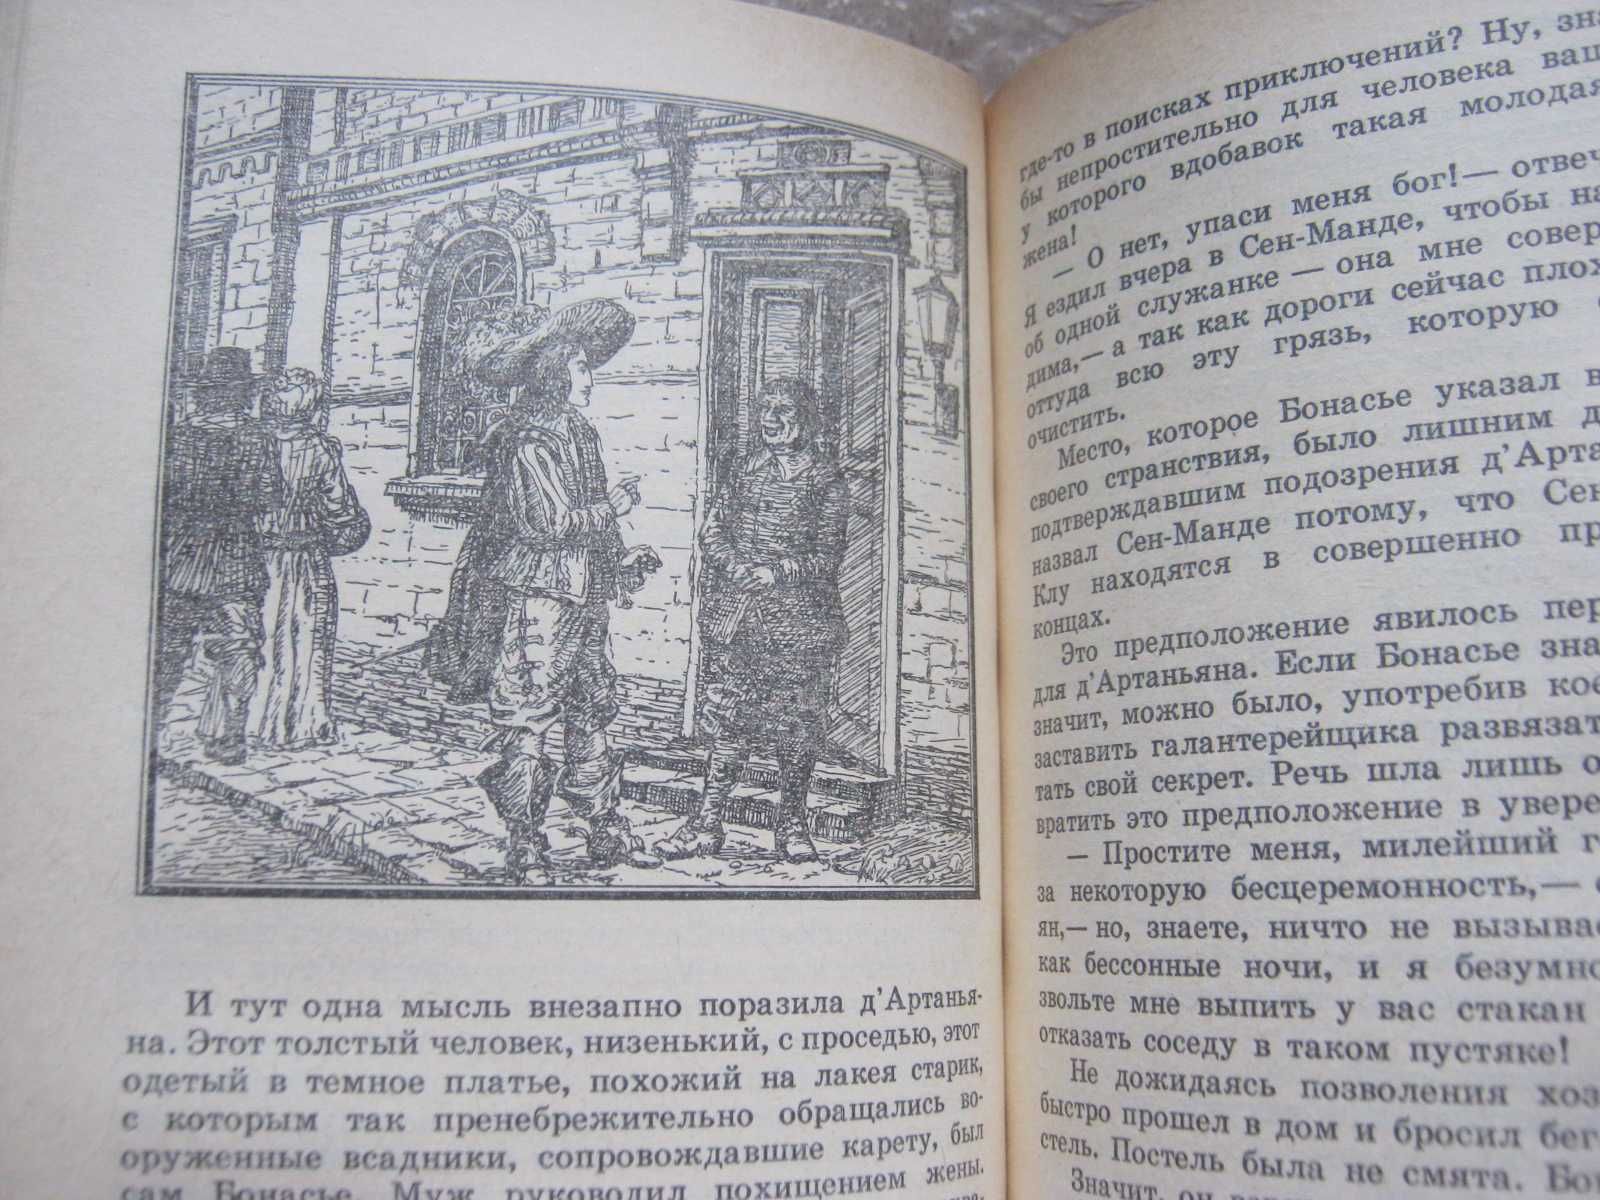 Ал. Дюма "Три мушкетера" Библиотека приключений и фантастики, 1989 год